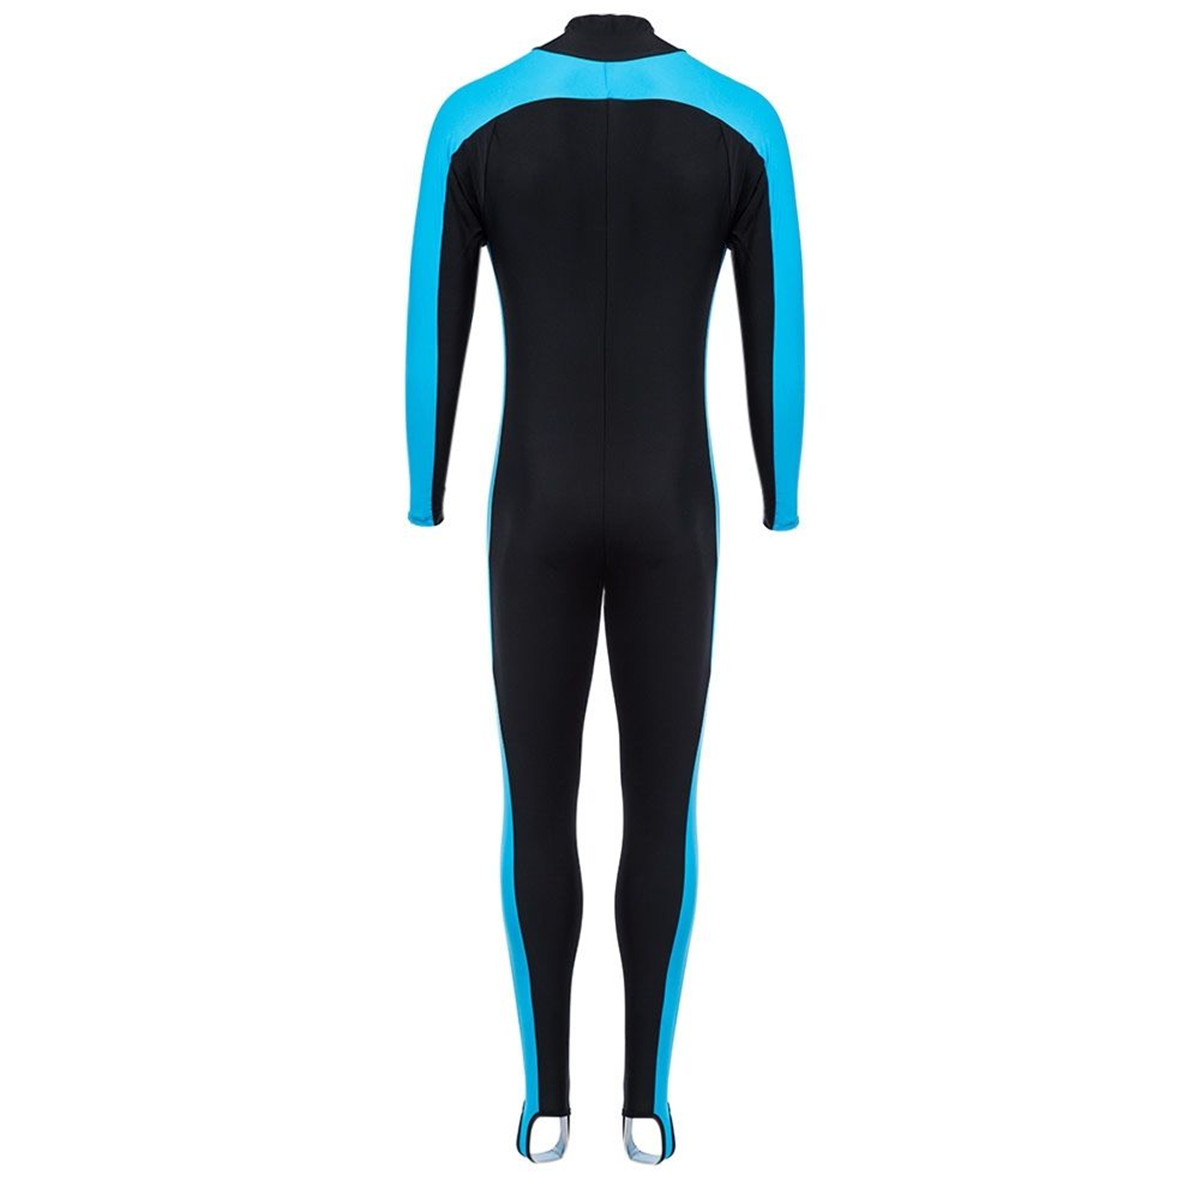 Unisex-Full-Body-Diving-Suit-Men-Women-Scuba-Diving-Wetsuit-Swimming-Surfing-UV-Protection-Snorkelin-1714664-7